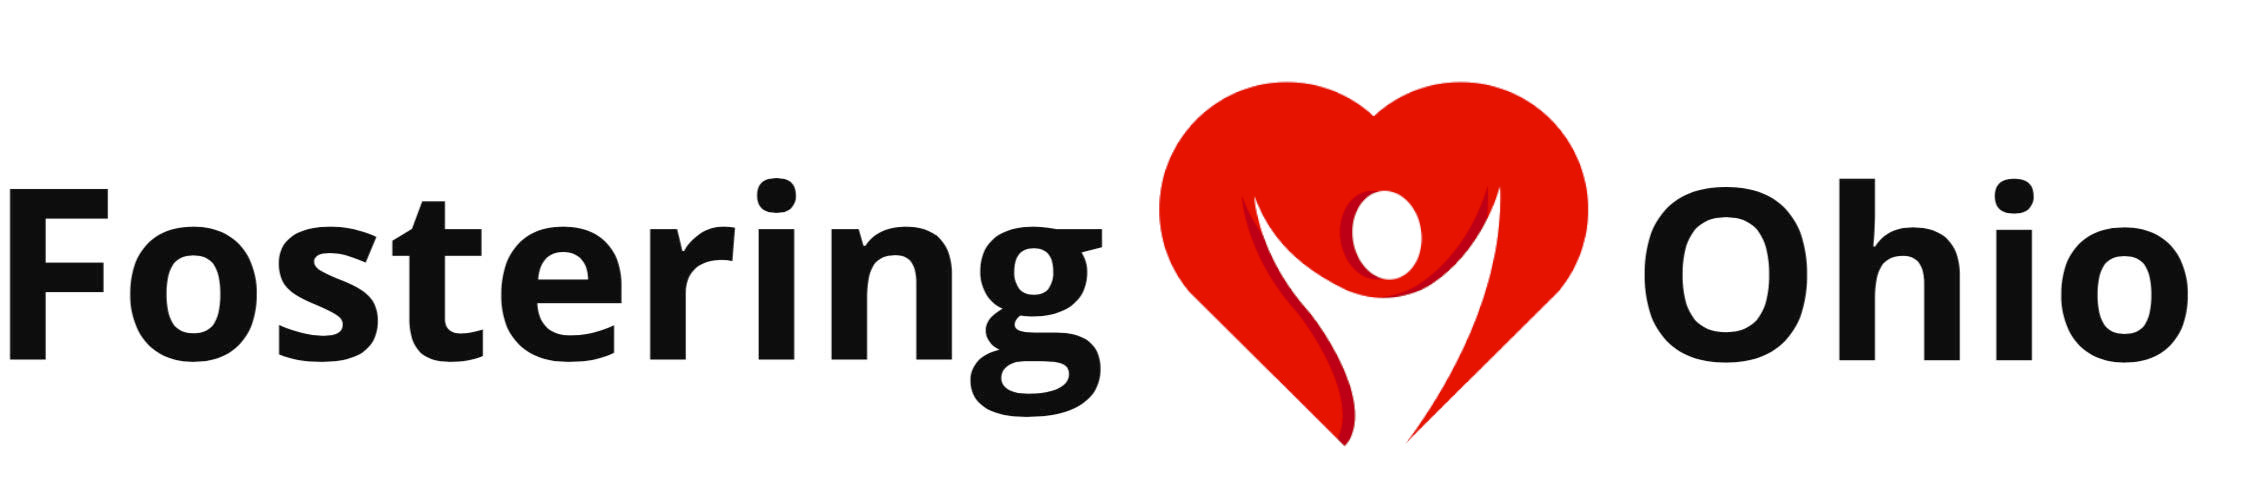 Fostering Ohio Logo